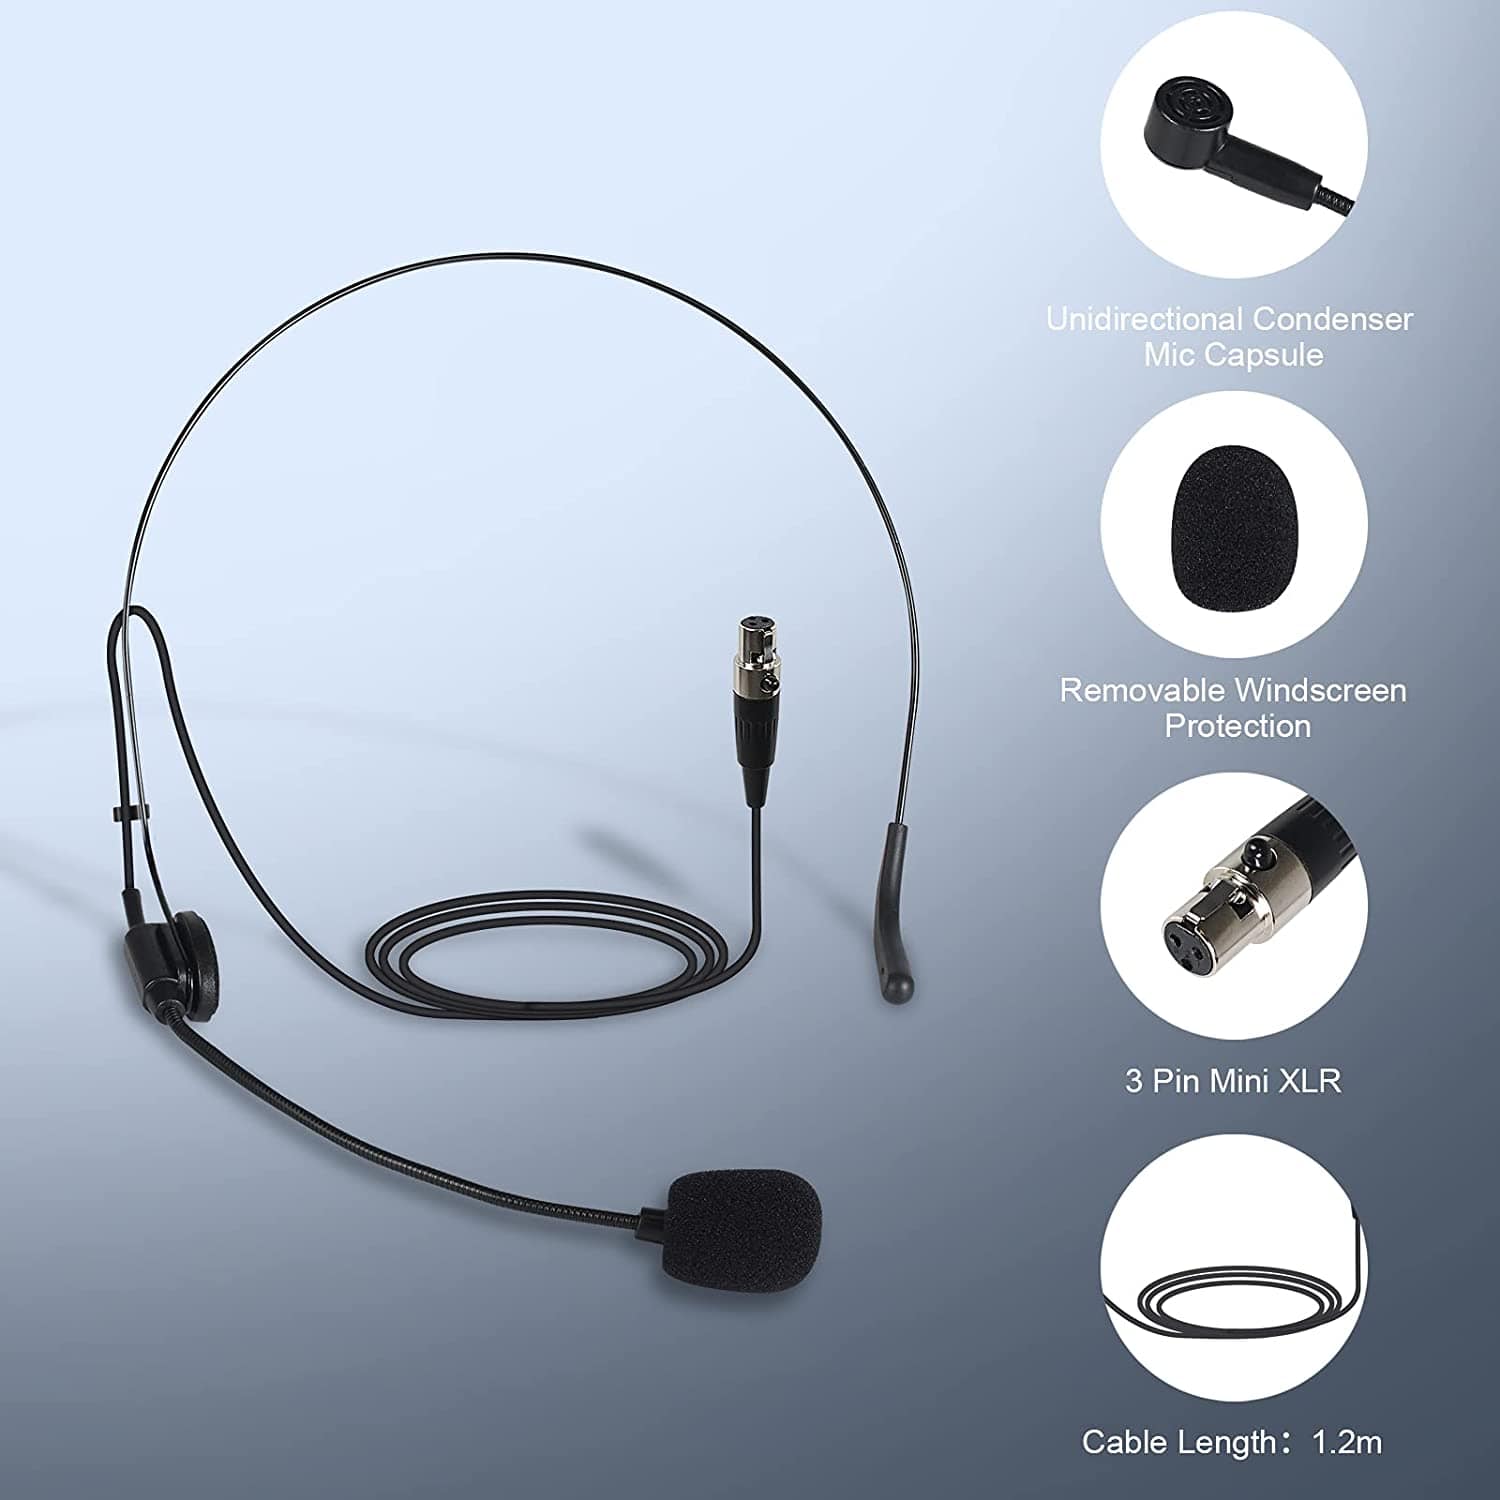 Phenyx Pro Lavalier Lapel/Headset Microphone Combo With 3 Pin Mini XLR Jack (Black)